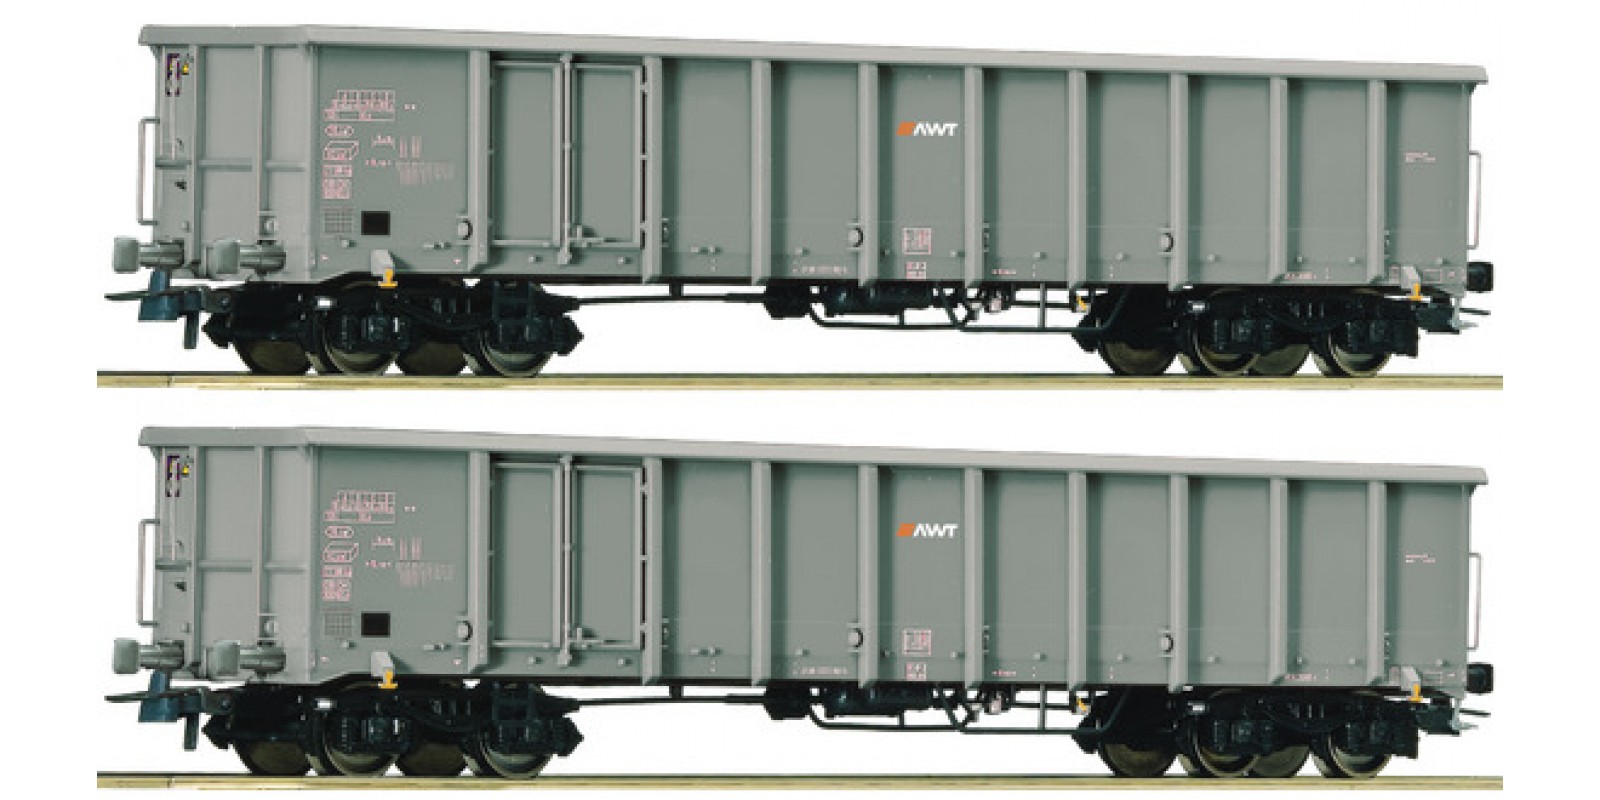 RO76099 - 2 piece set: Open goods wagons, AWT